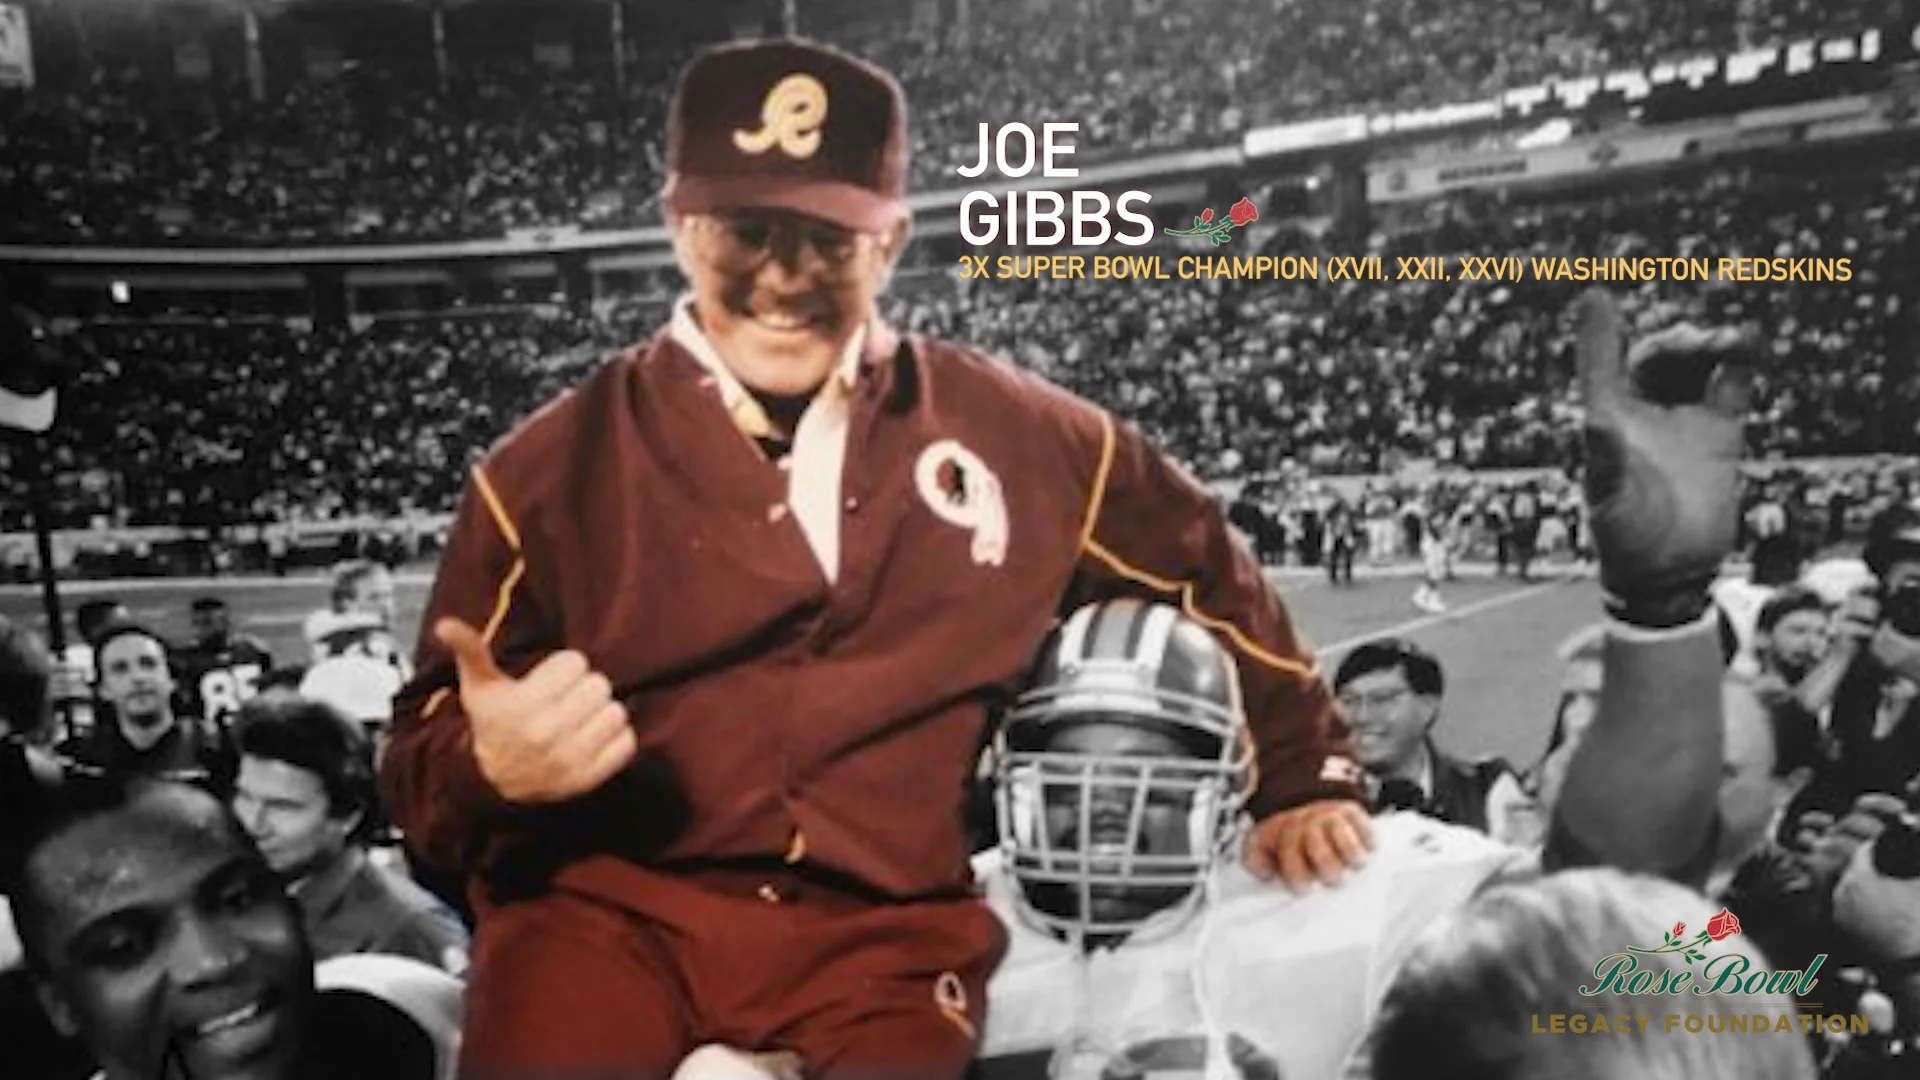 Joe Gibbs  Rose Bowl Stadium Centennial (INSPIRE) on Vimeo